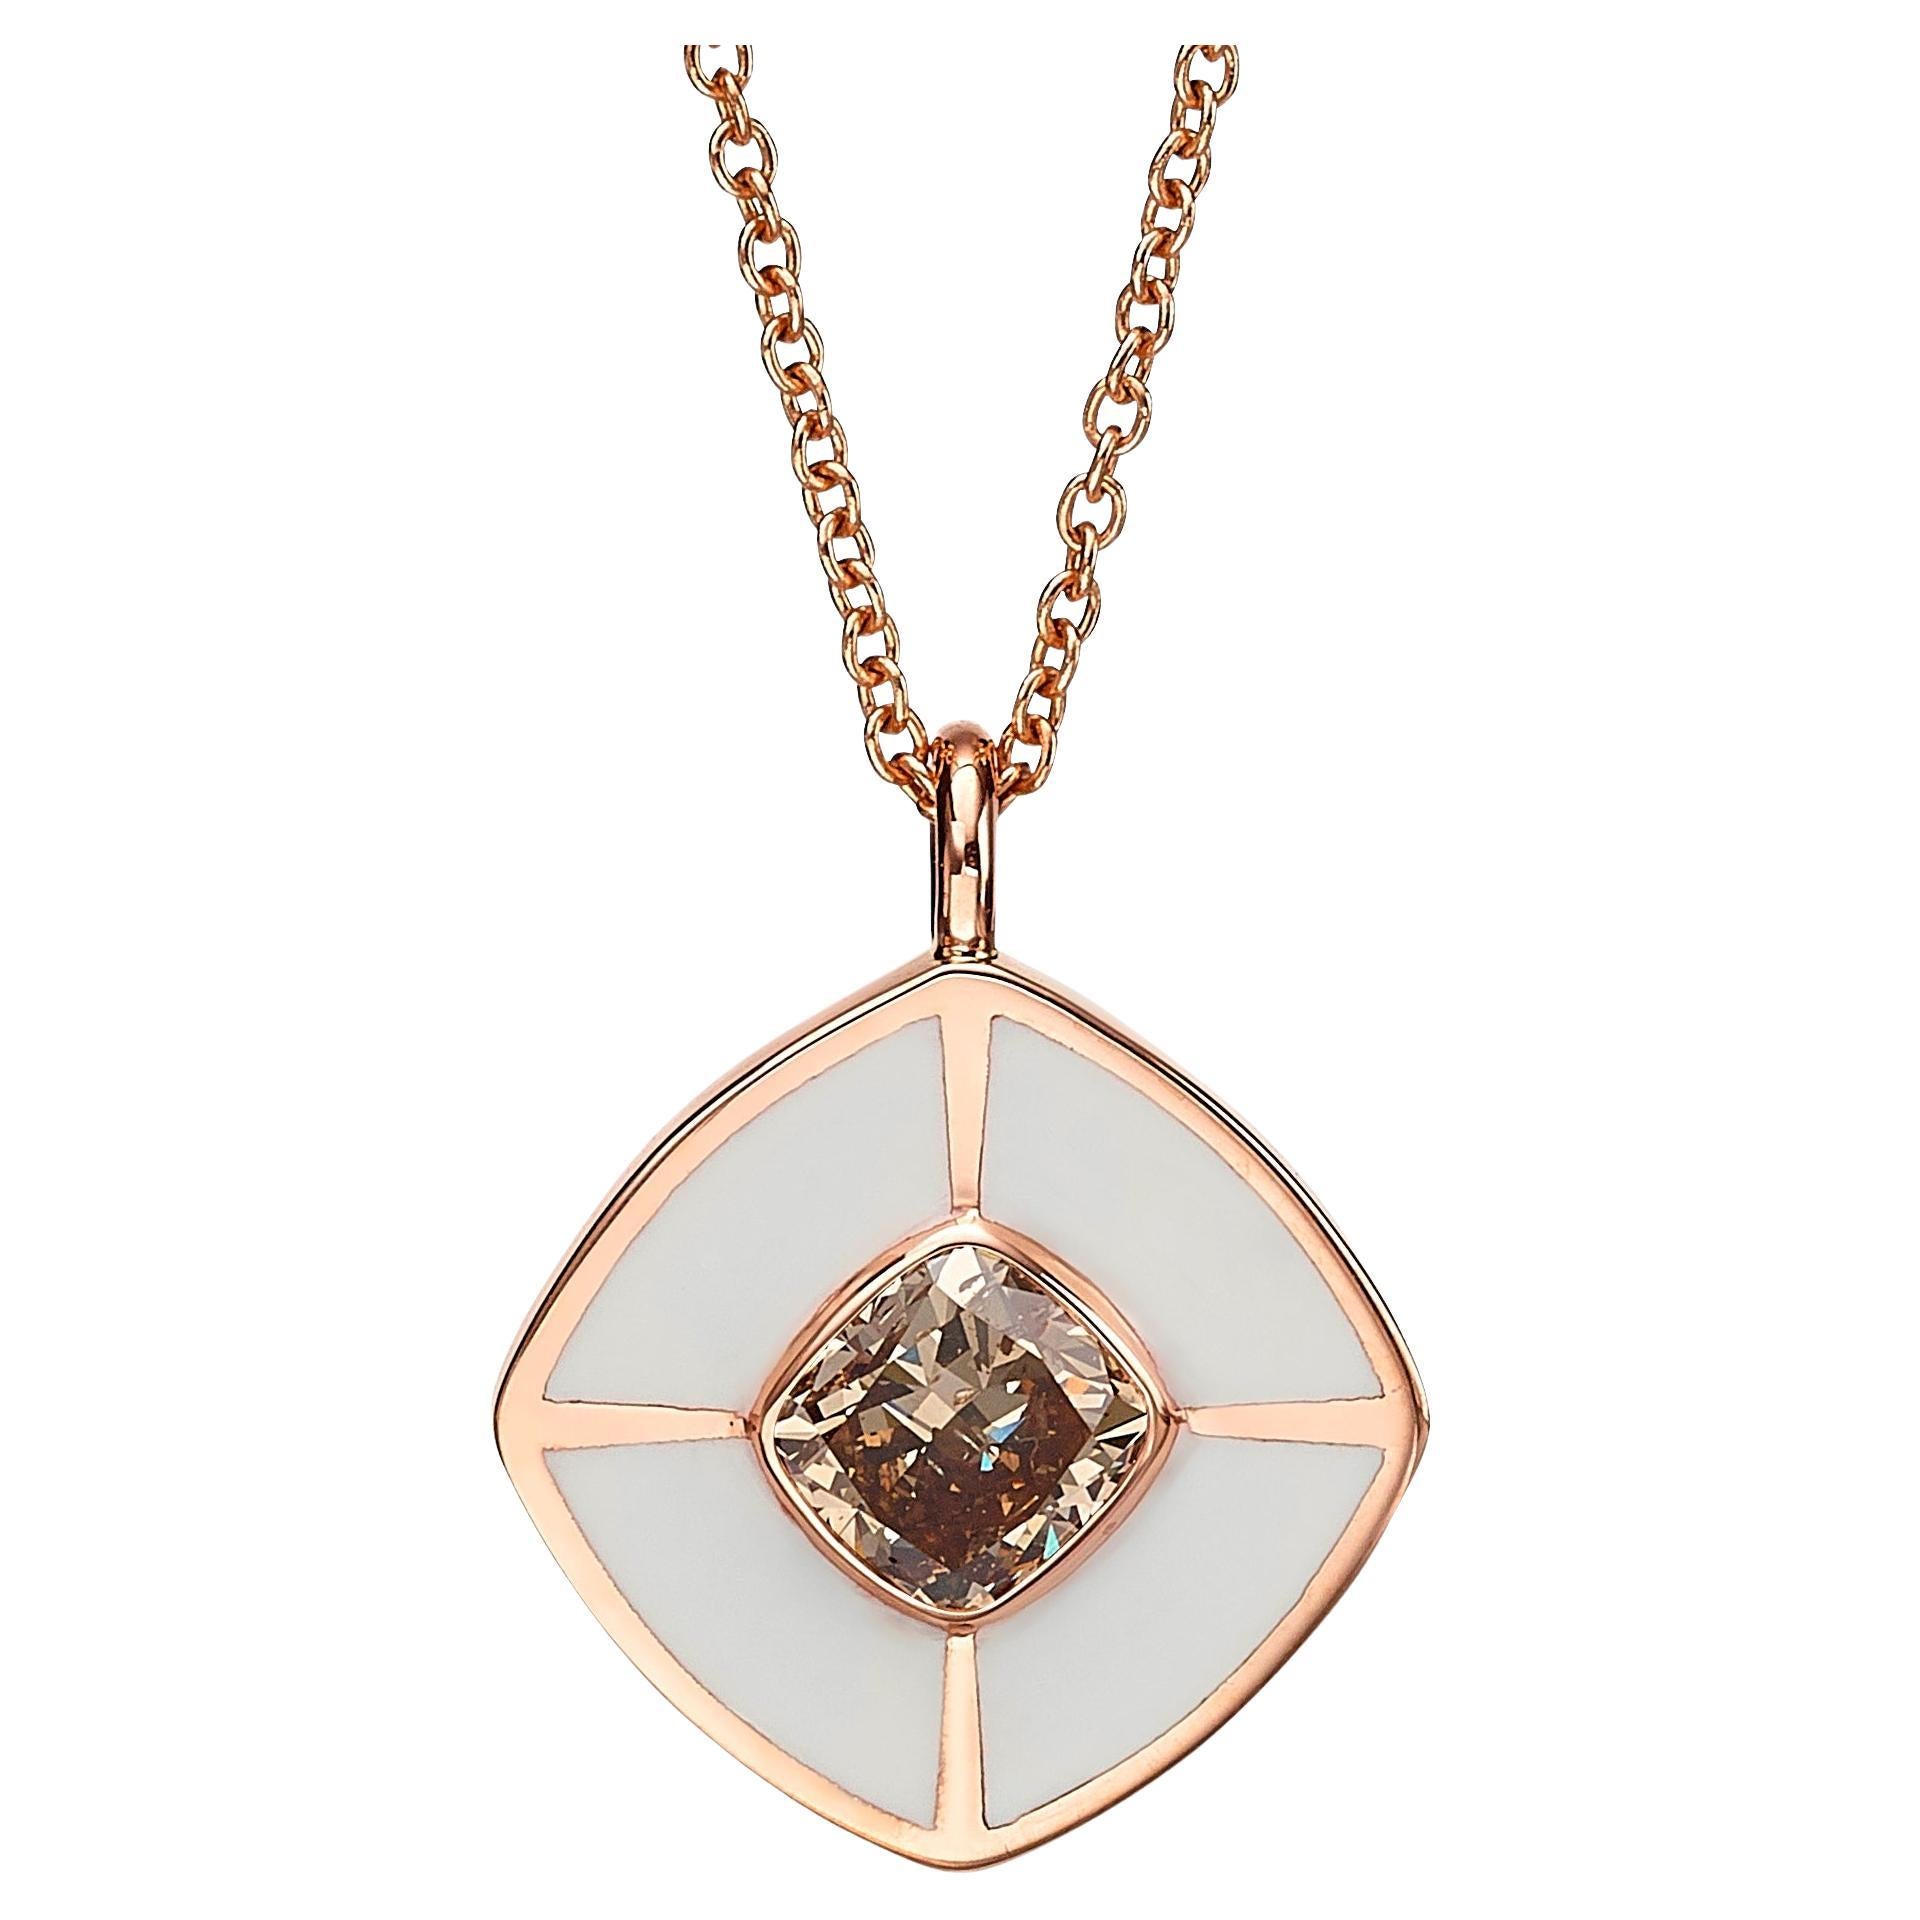 Venice Collection:Cushion-Shaped 18k Rose Gold Diamond Pendant with white Enamel